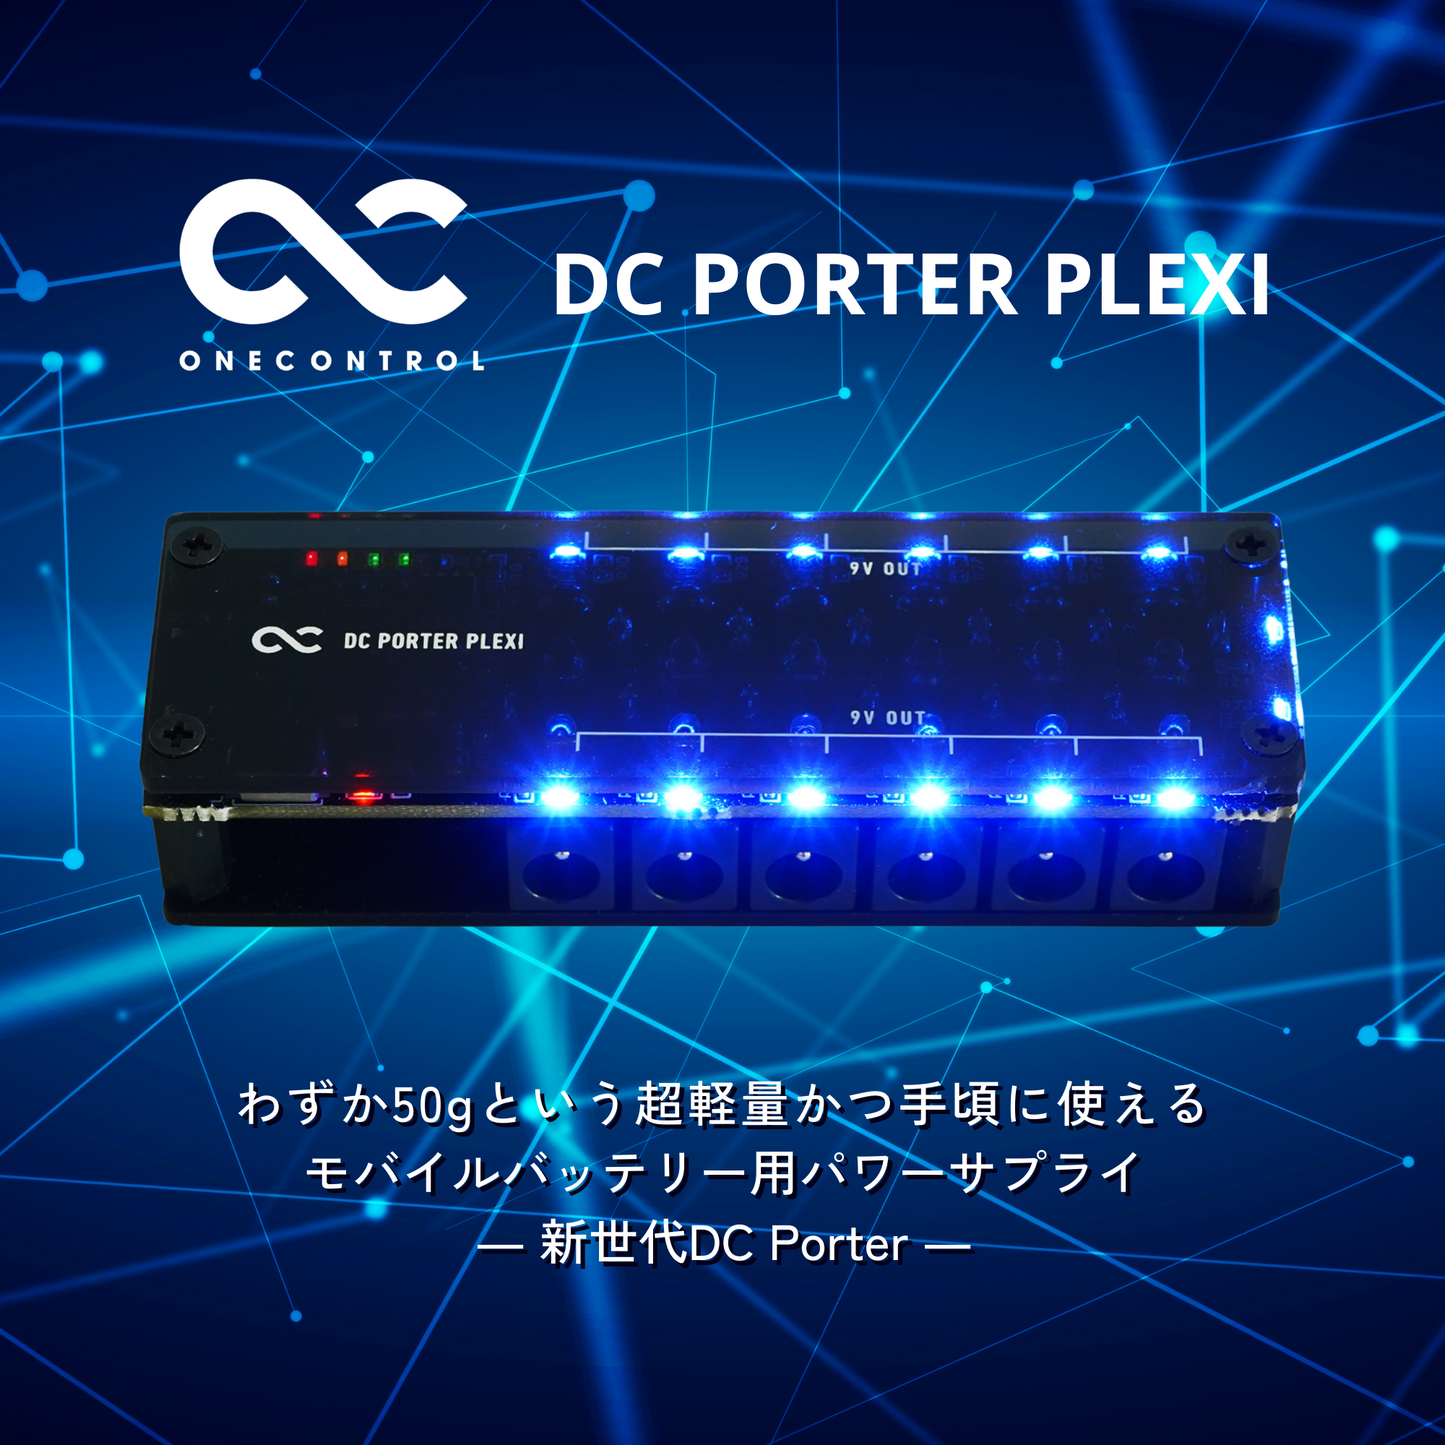 One Control / DC PORTER PLEXI